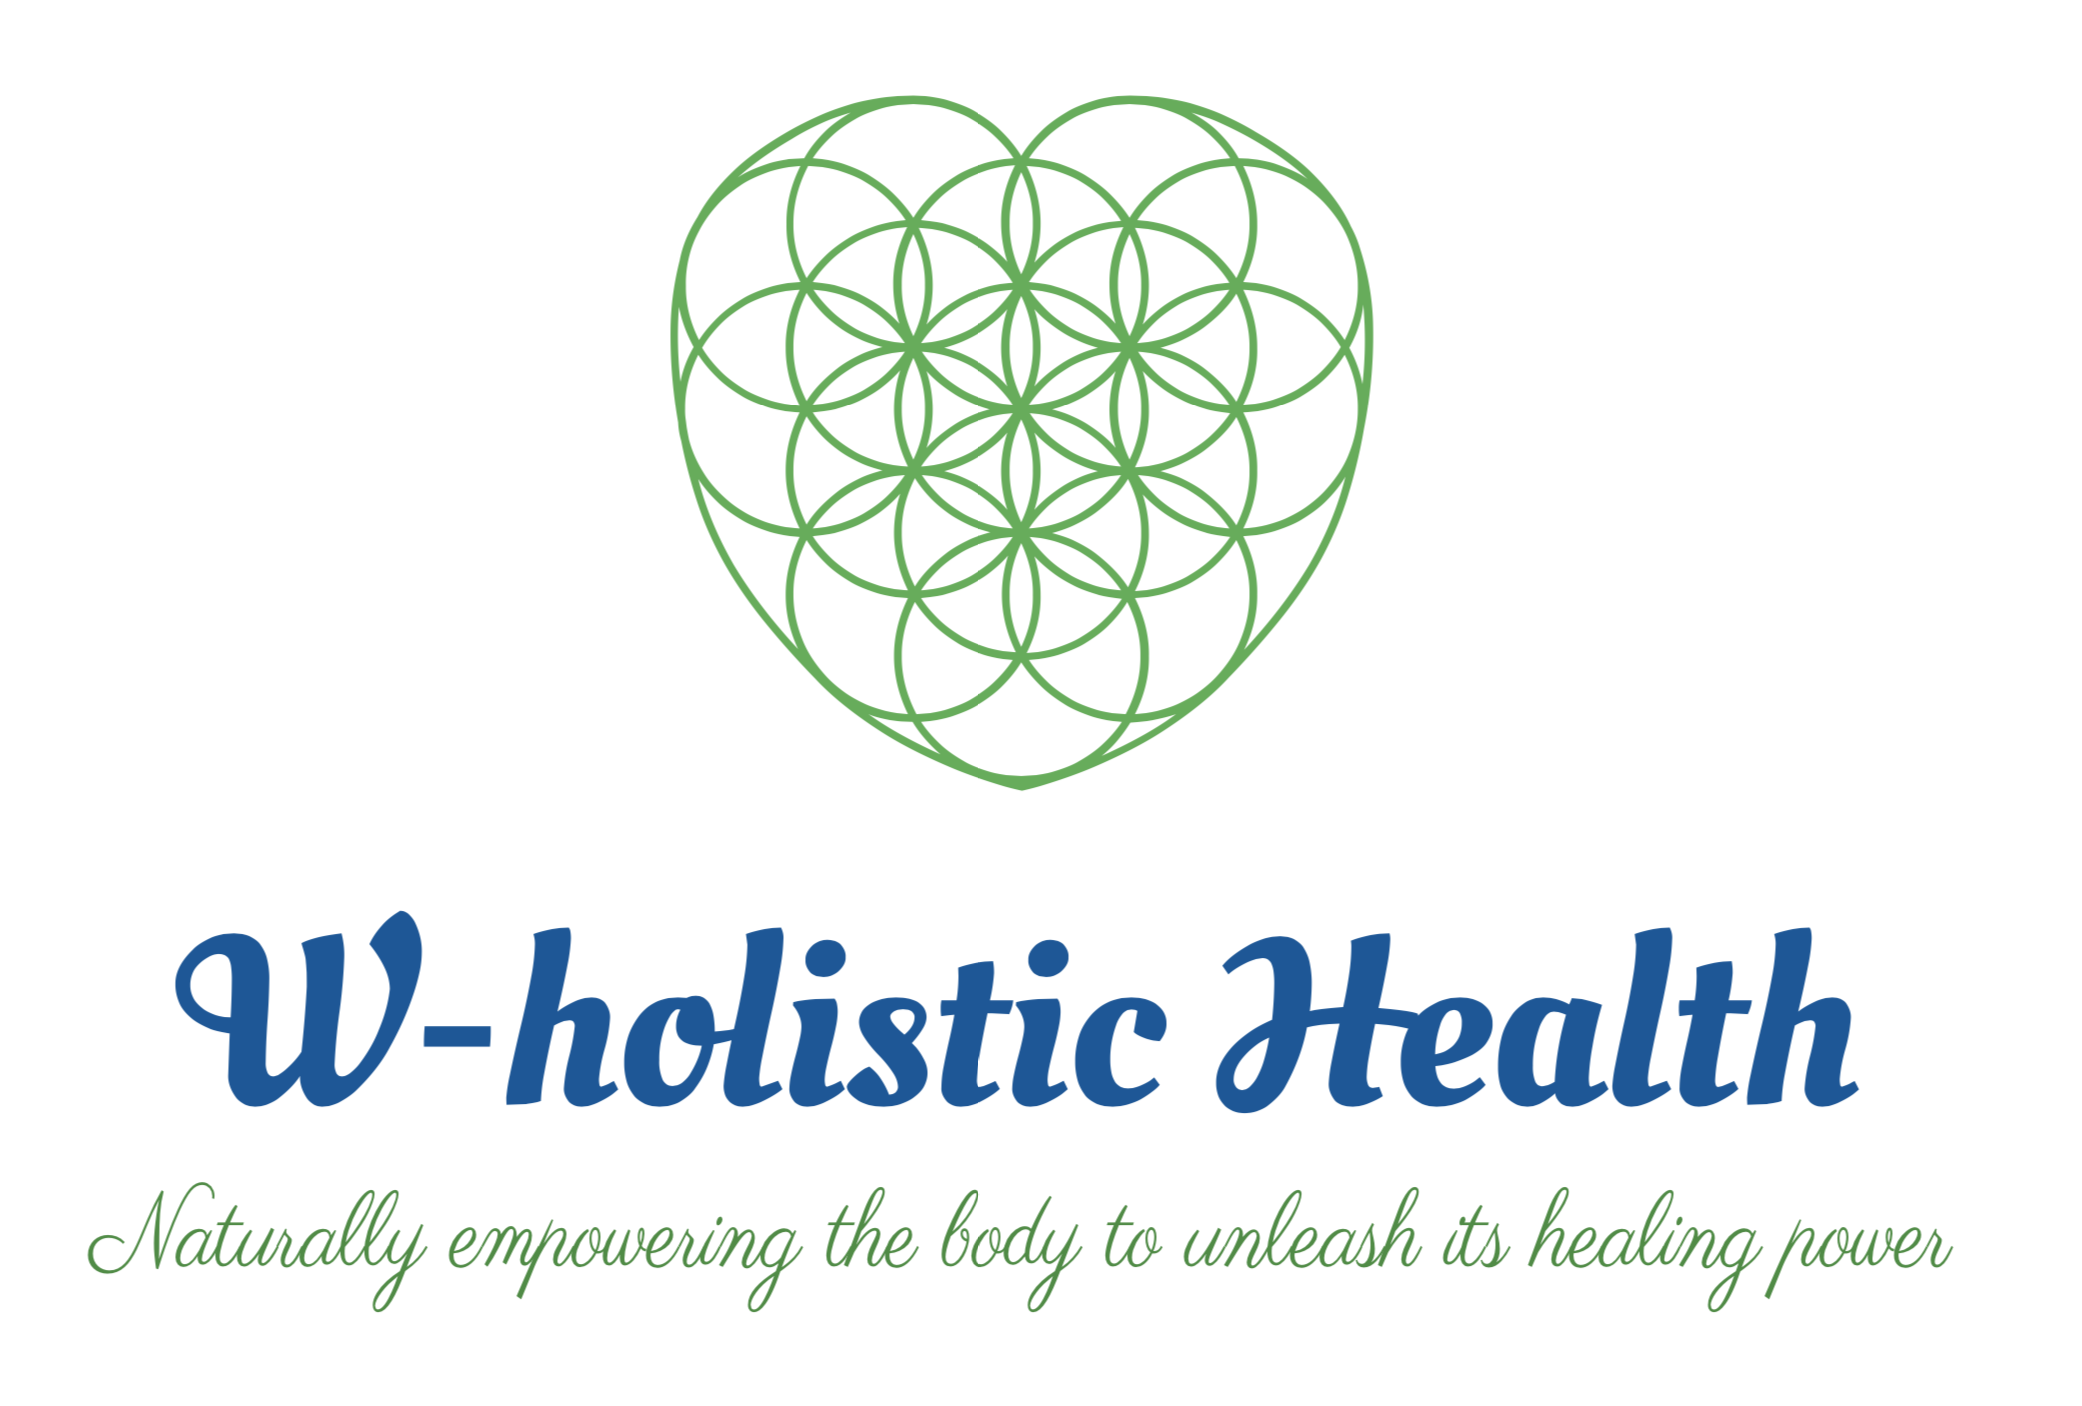 W-holistic Health